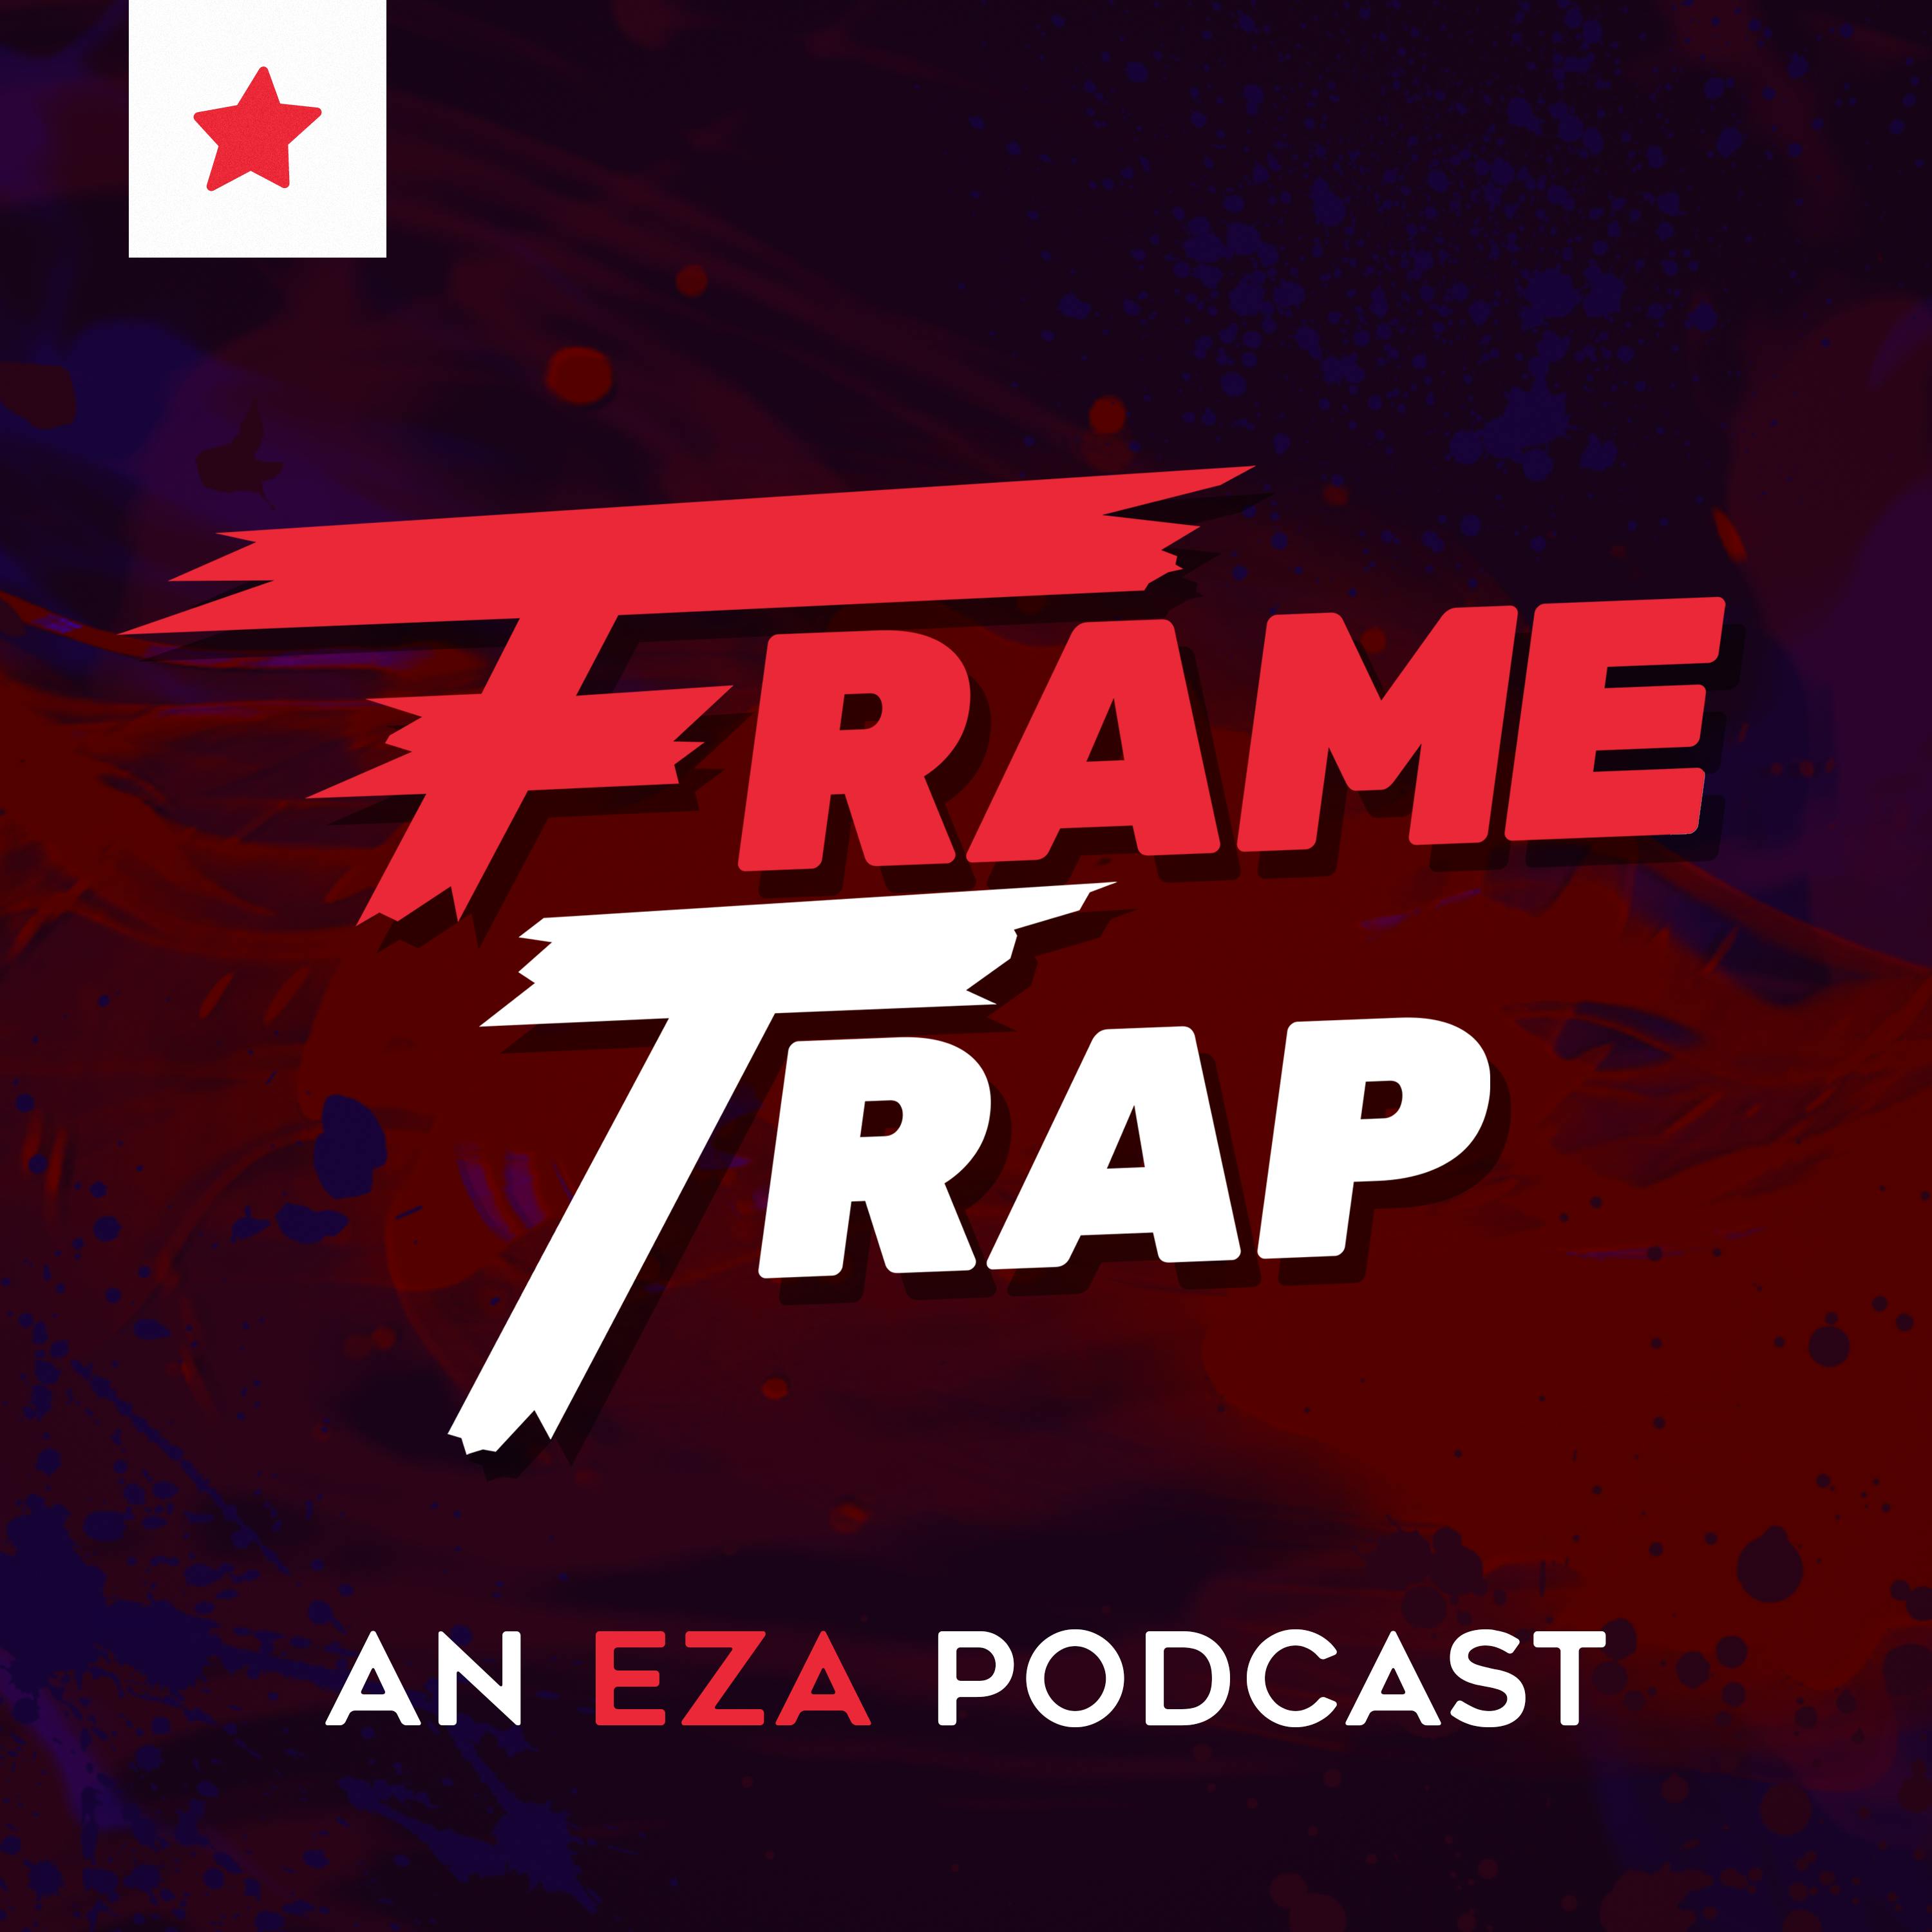 Frame Trap - Episode 169 